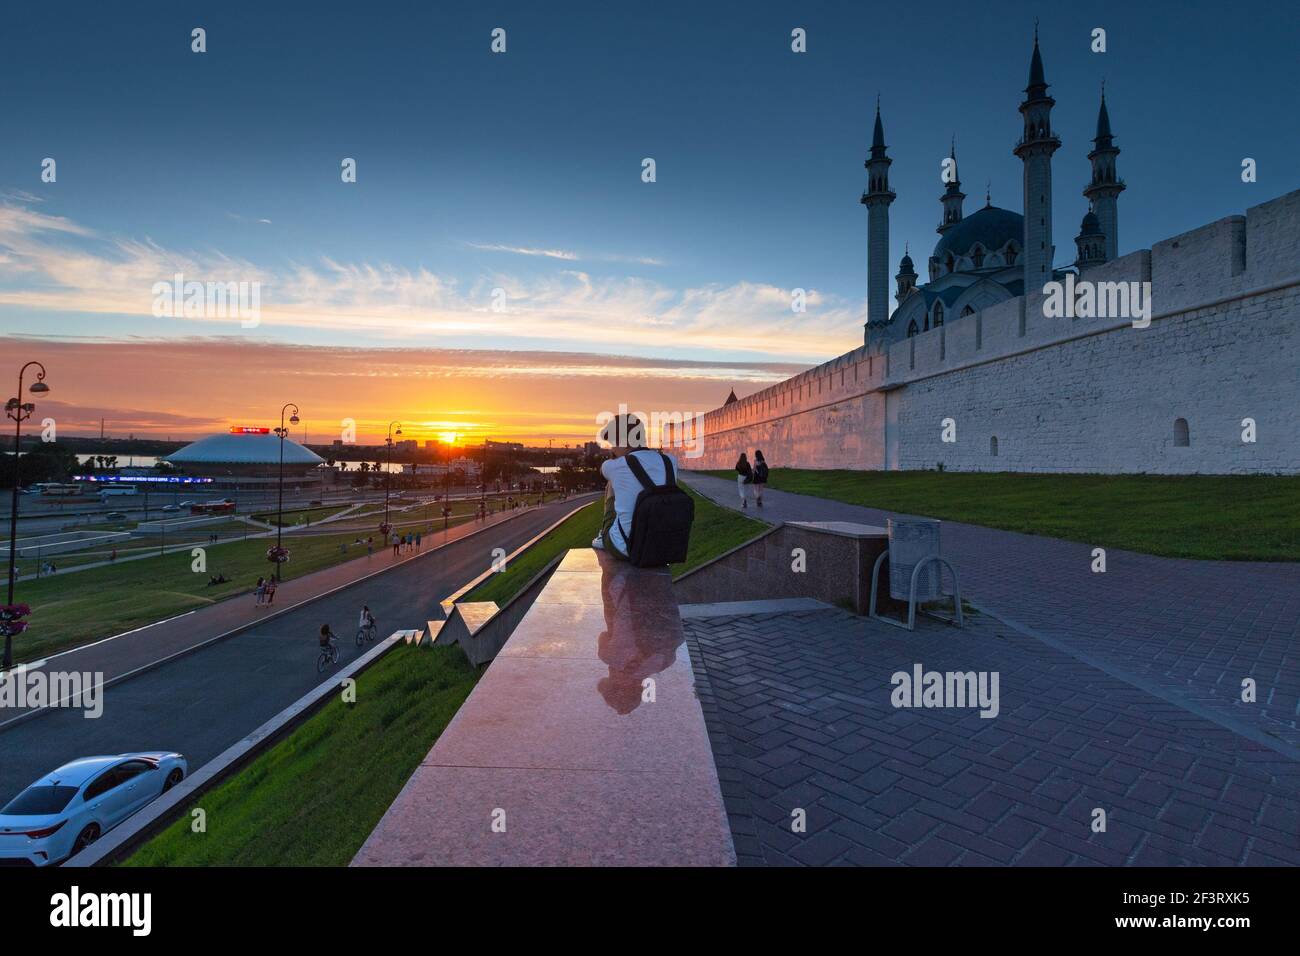 The wall of the Kazan Kremlin outside, illuminated by the sunset, people on a walk. Russia, Kazan 24 June 2019 Stock Photo